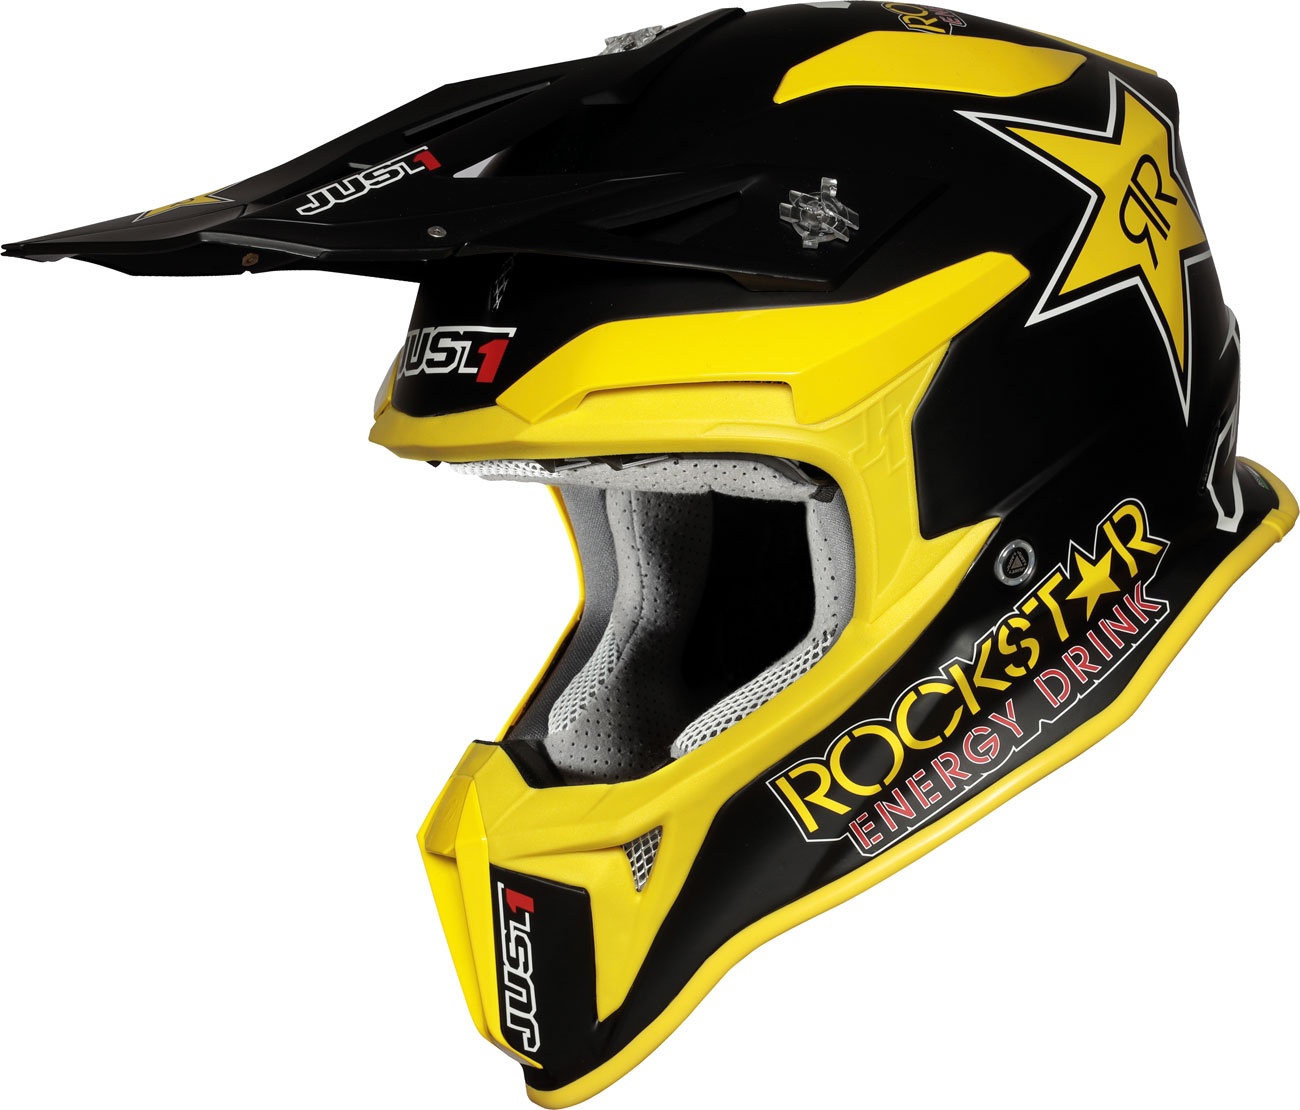 Just1 J18 Rockstar, casque croisé - Noir/Jaune - XL